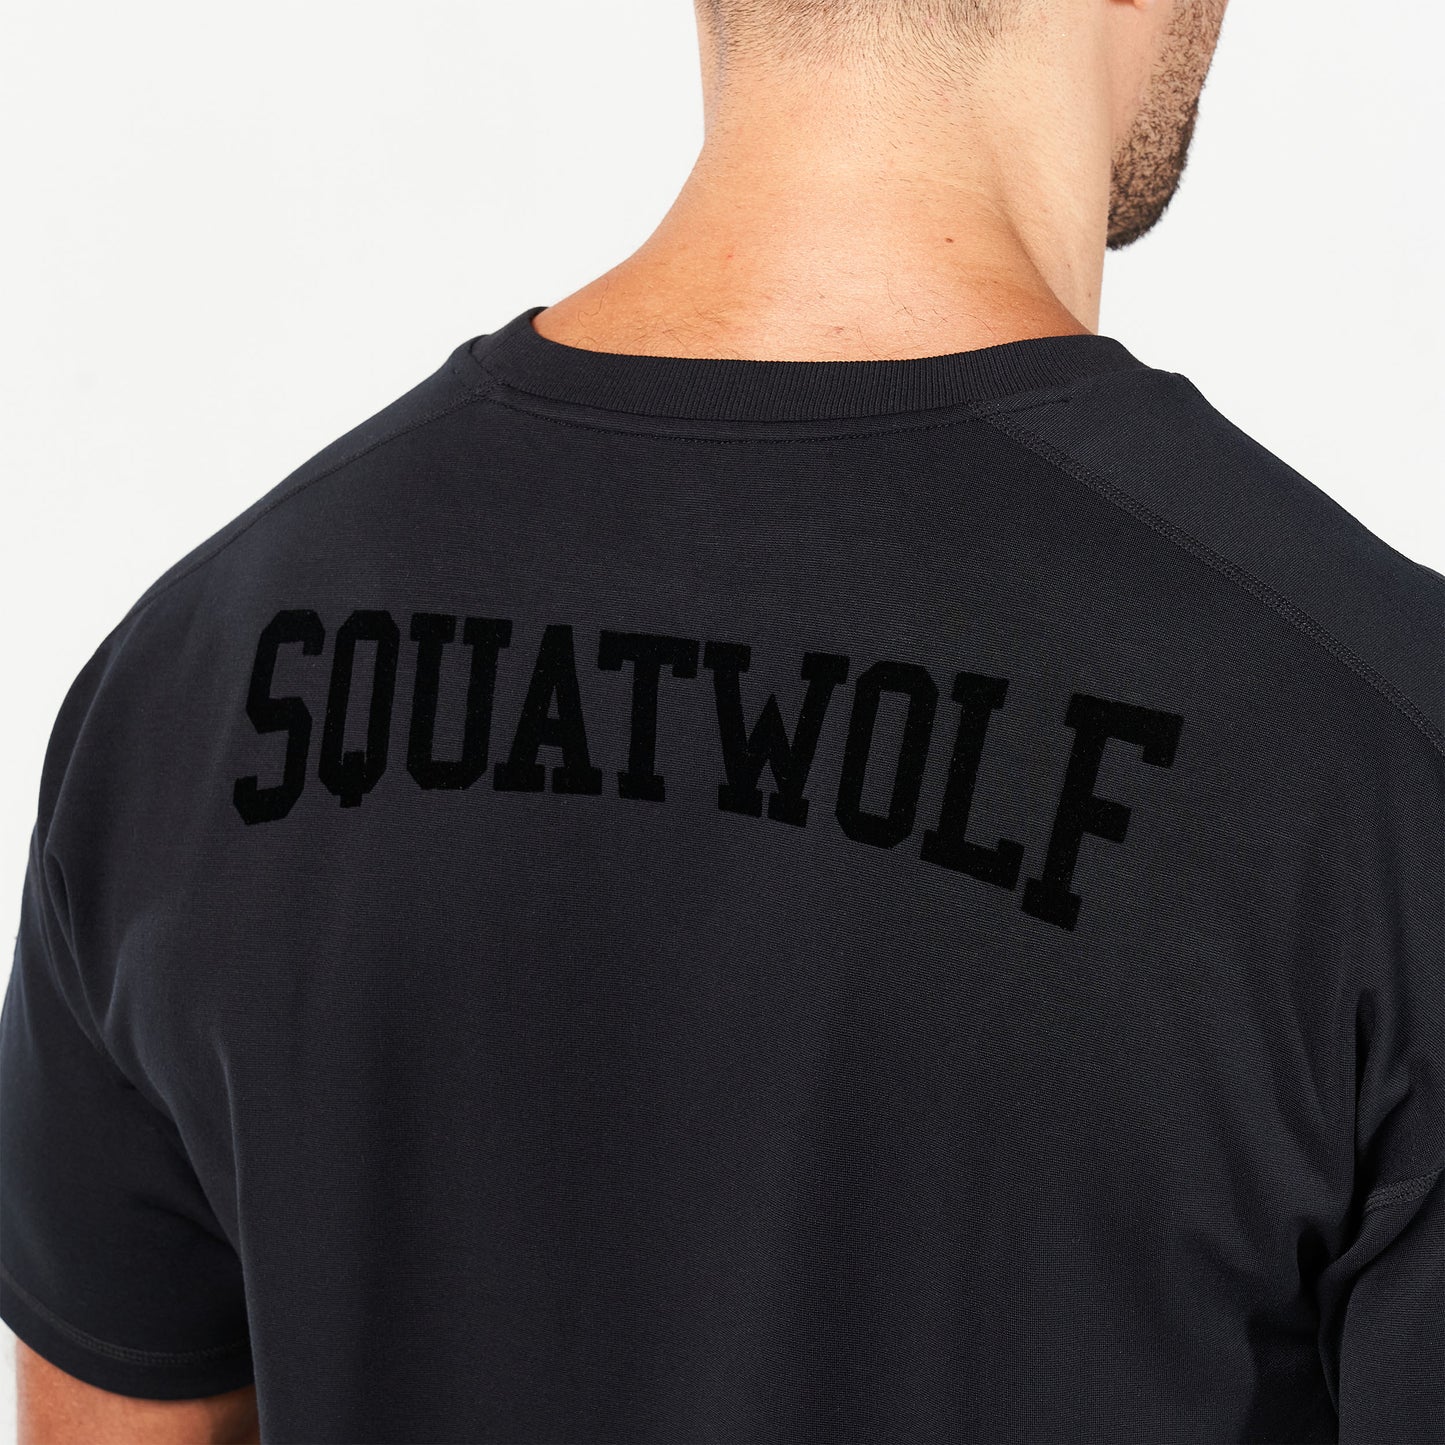 squatwolf-gym-wear-golden-era-legacy-oversized-tee-black-workout-shirts-for-men